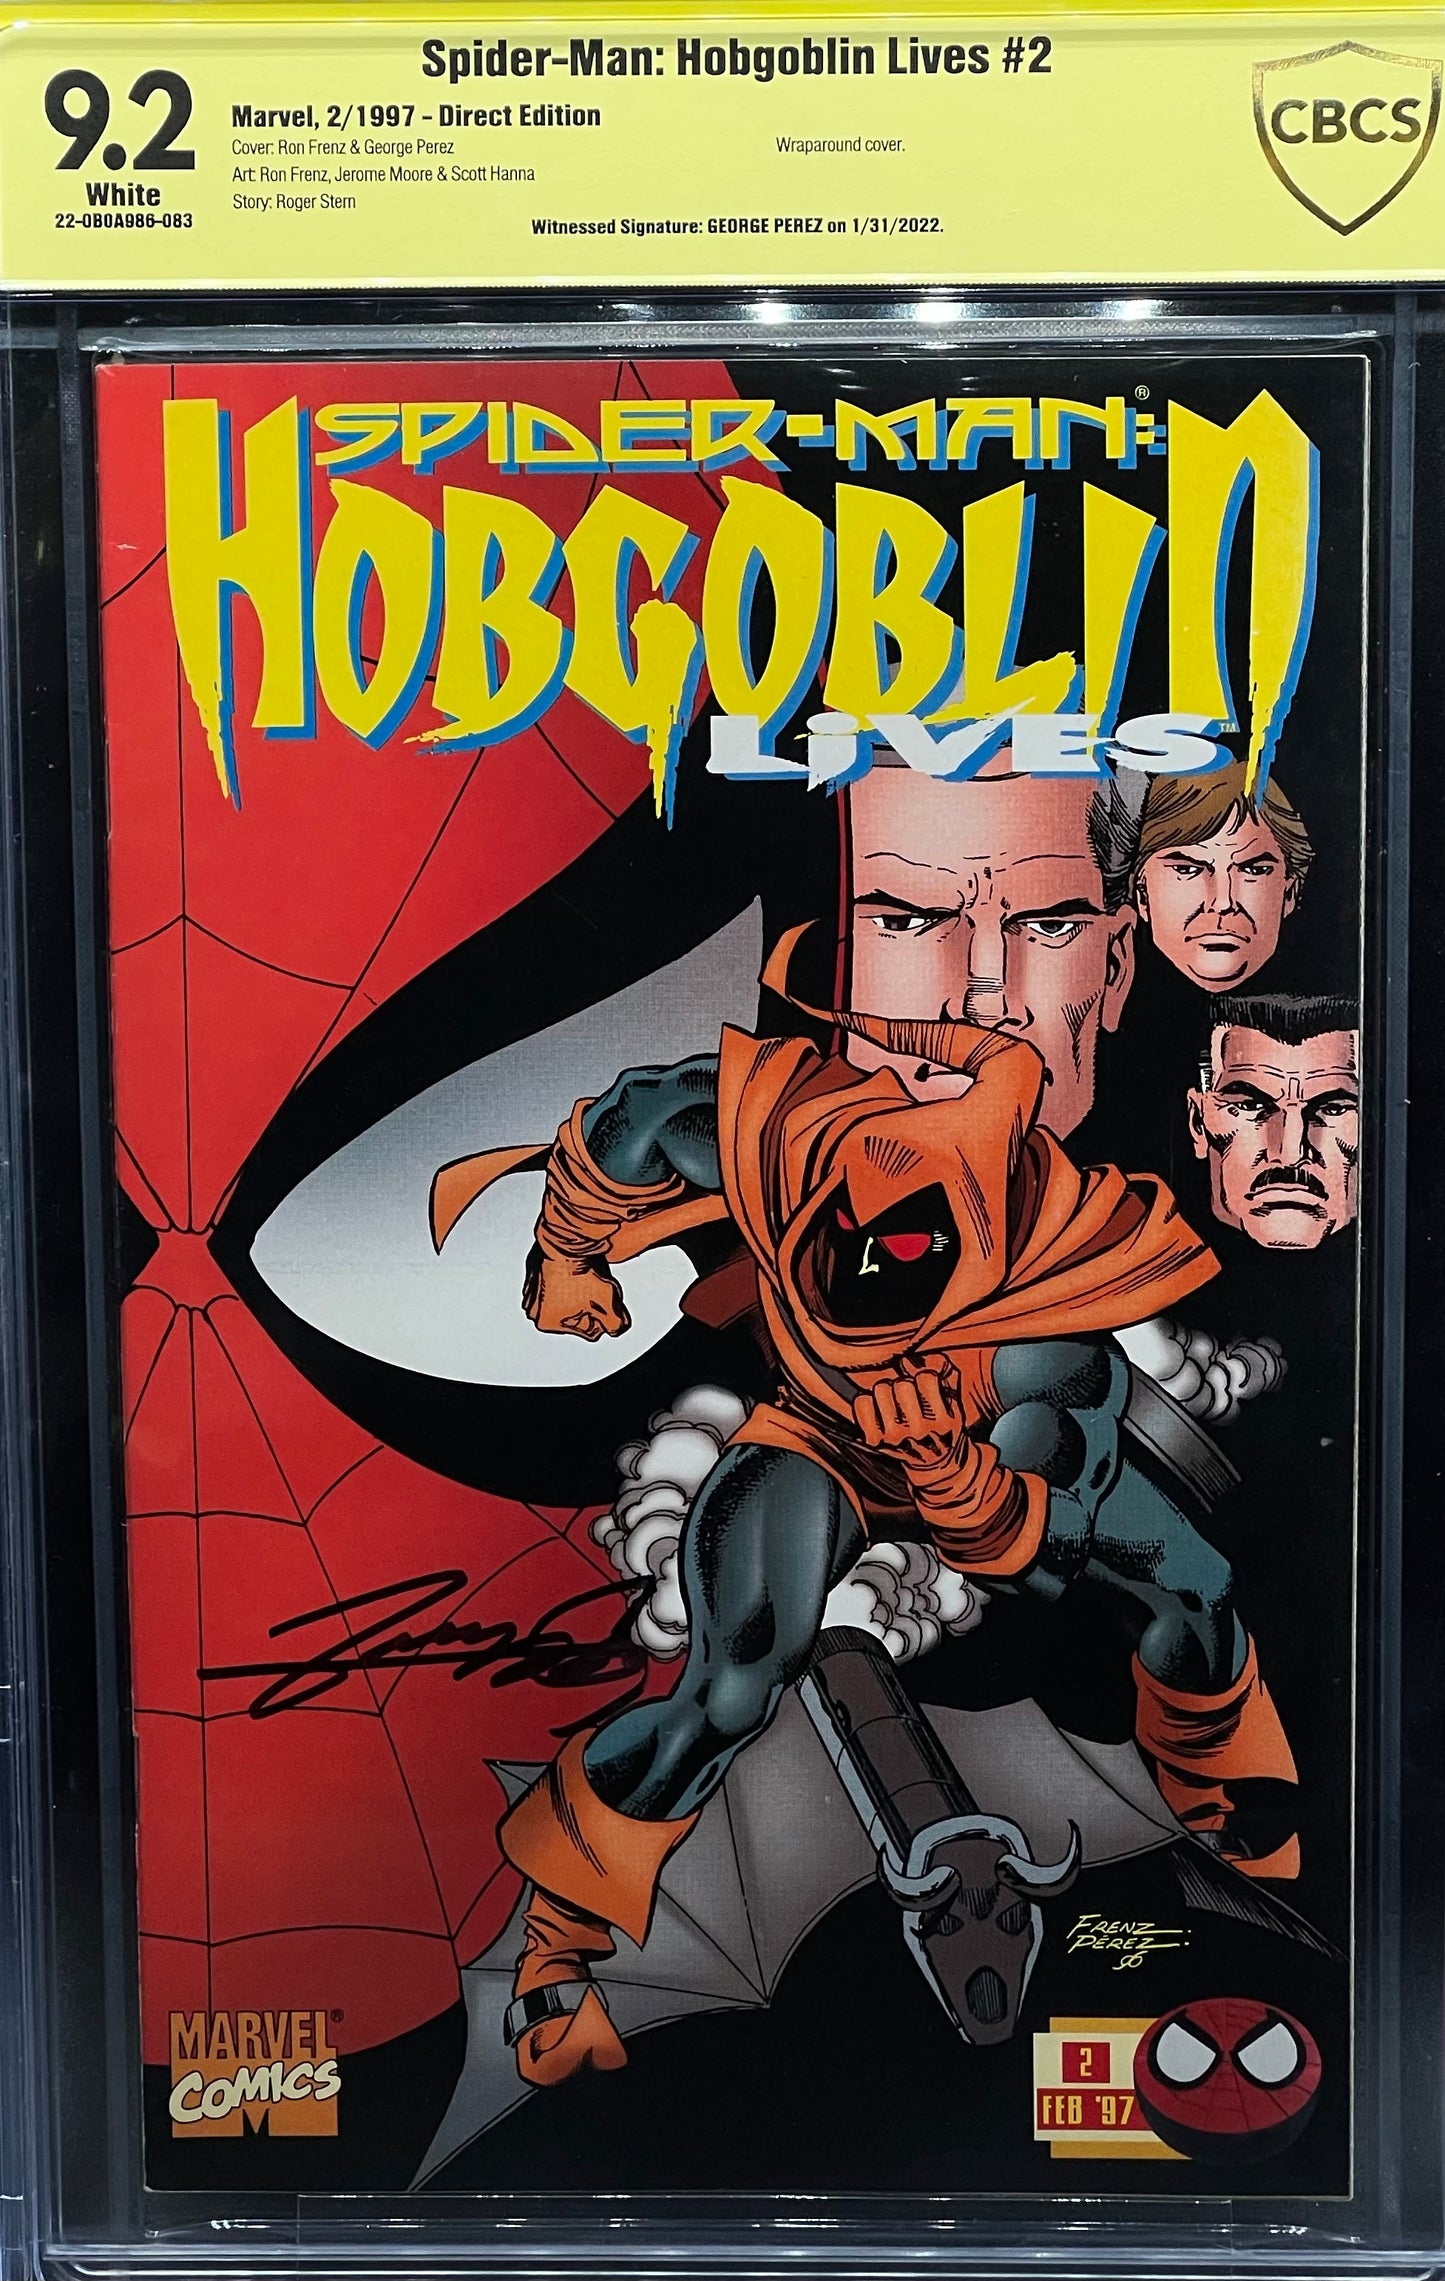 Spider-Man: Hobgoblin Lives #2 CBCS 9.2 Yellow Label George Perez